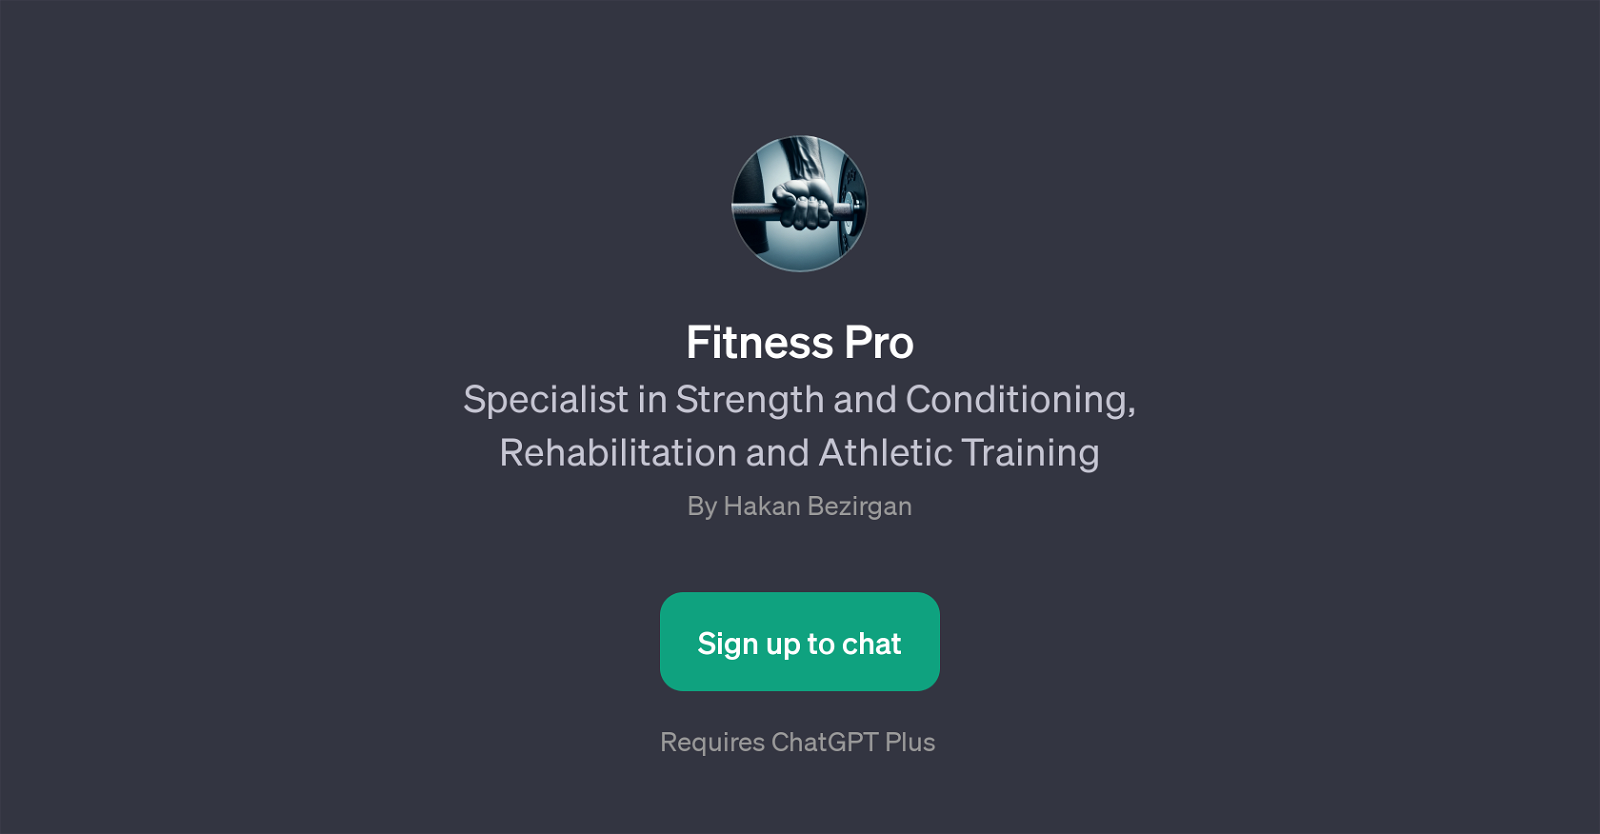 Fitness Pro website